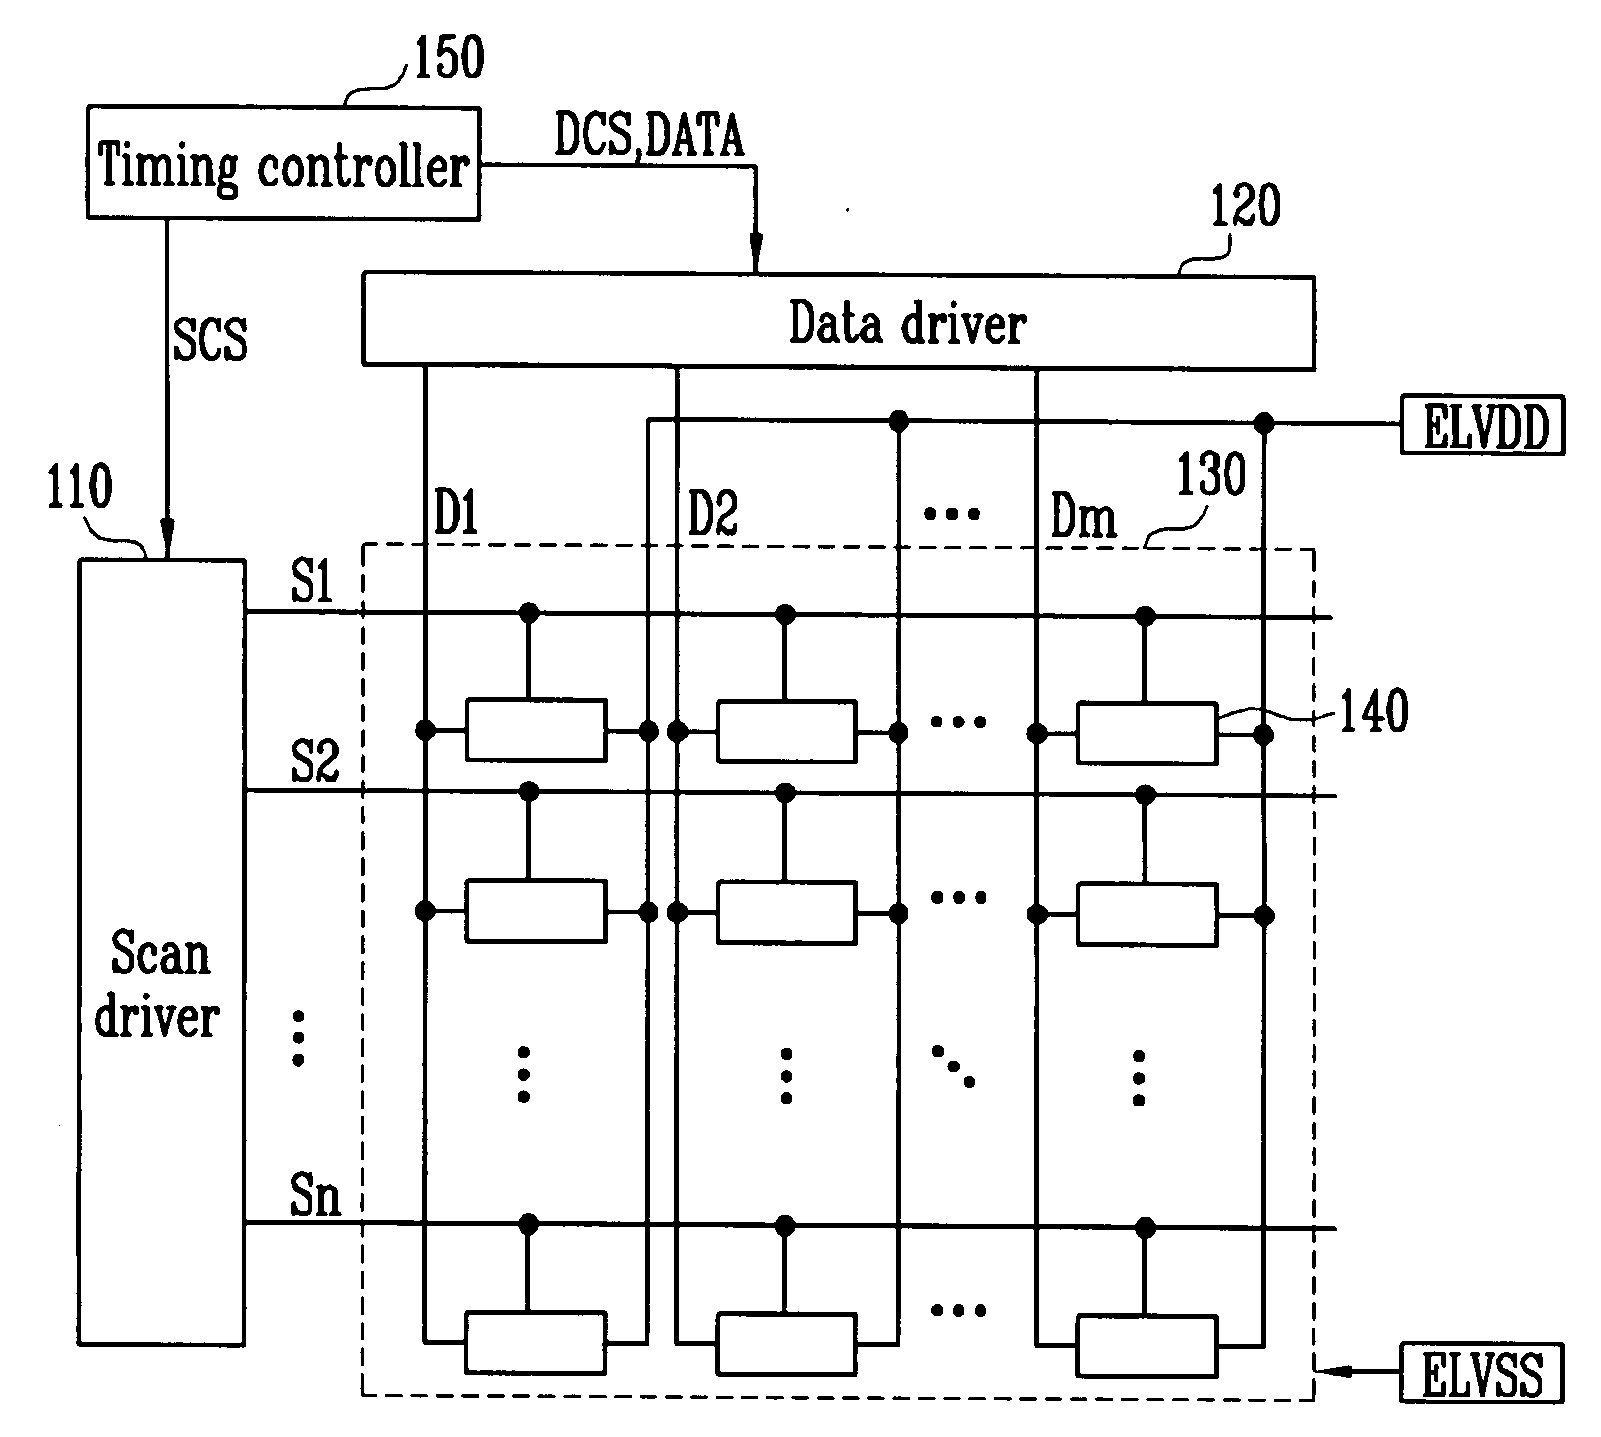 Logic gate, scan driver and organic light emitting diode display using the same